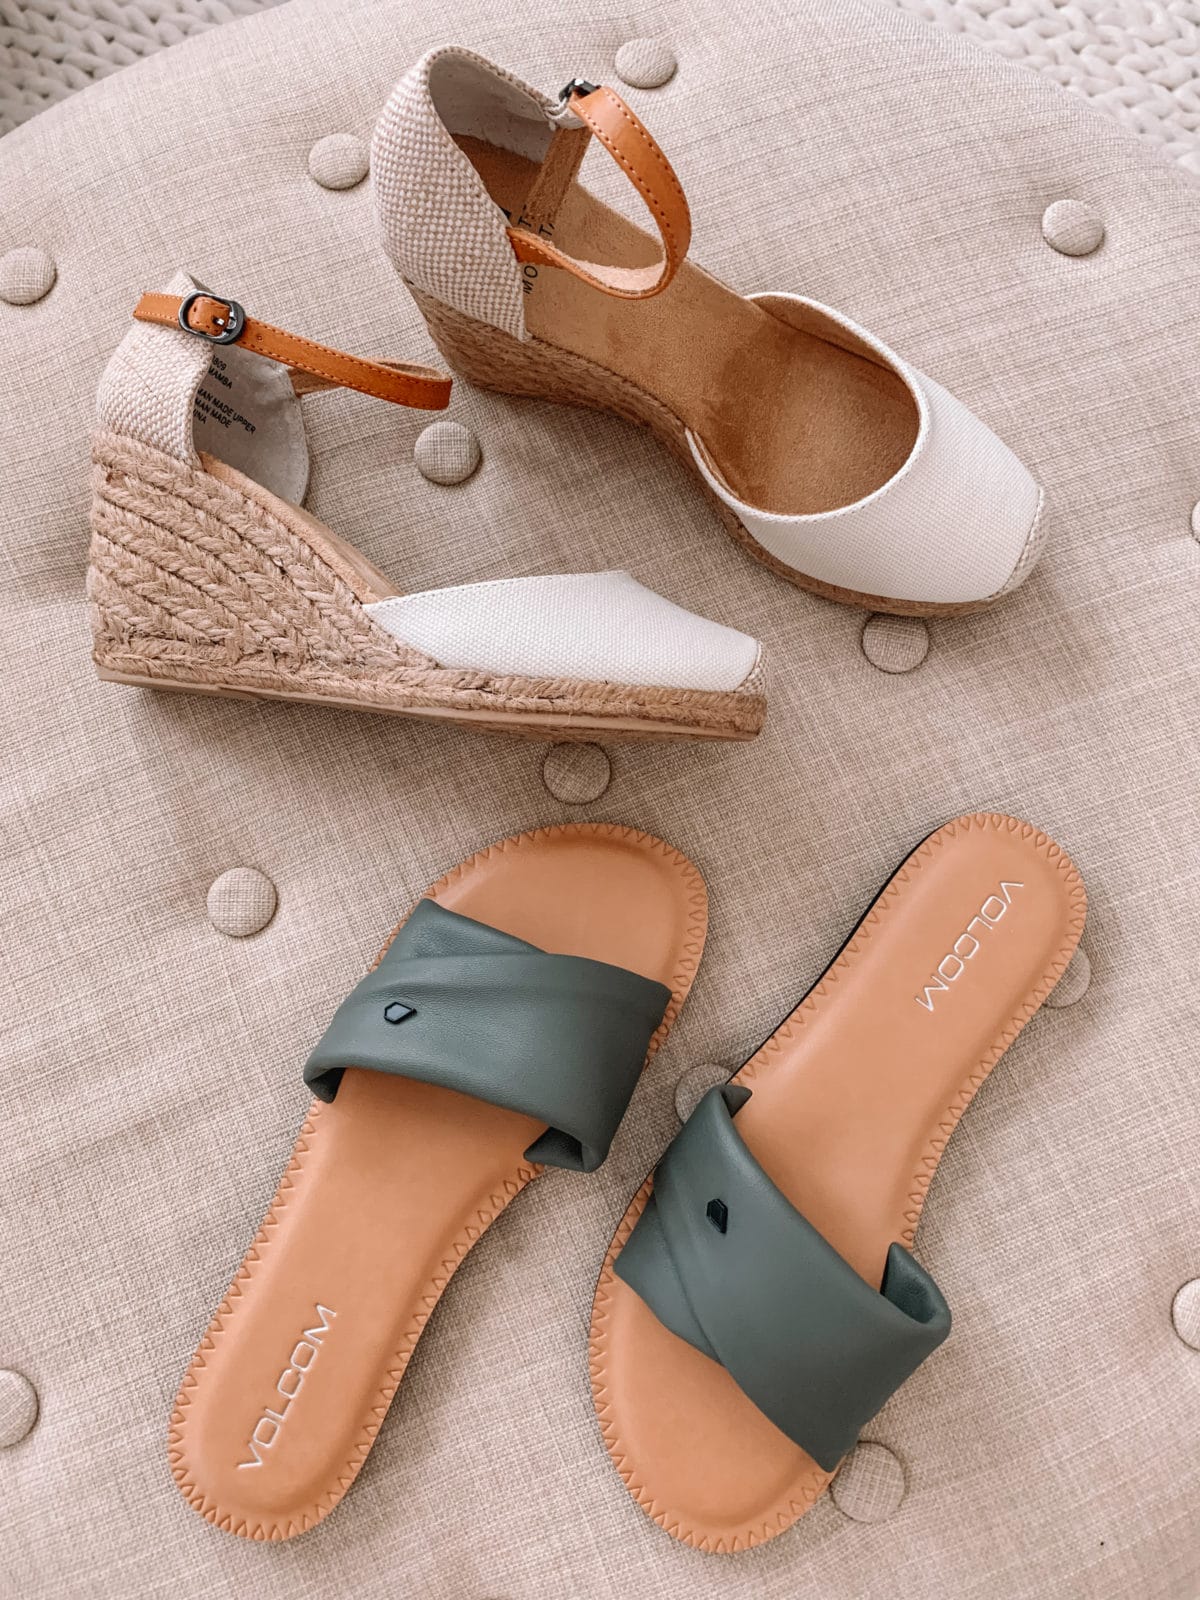 Amazon Fashion Finds, Espadrille Sandals, Slide Sandals